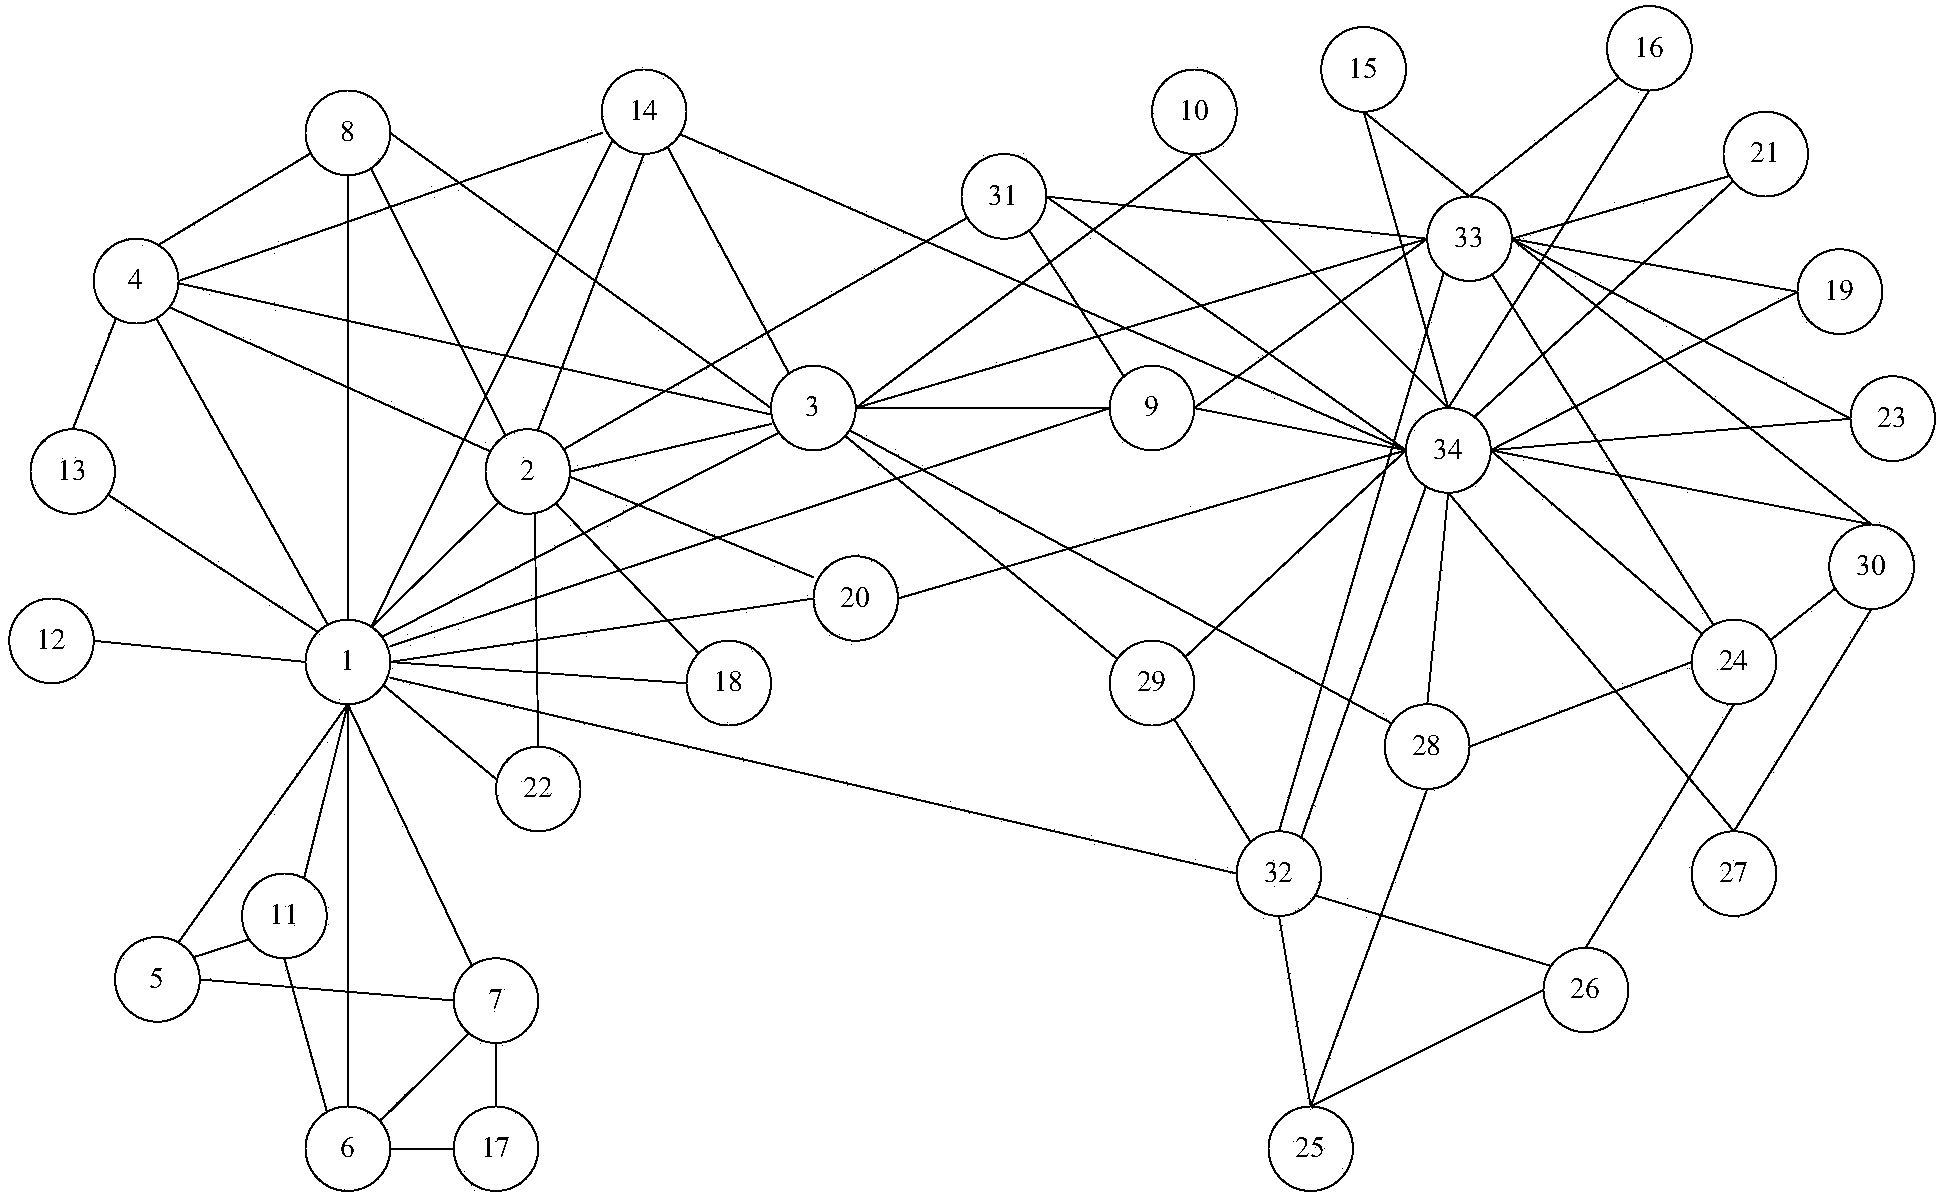 Network community detecting method based on multi-objective memetic computation